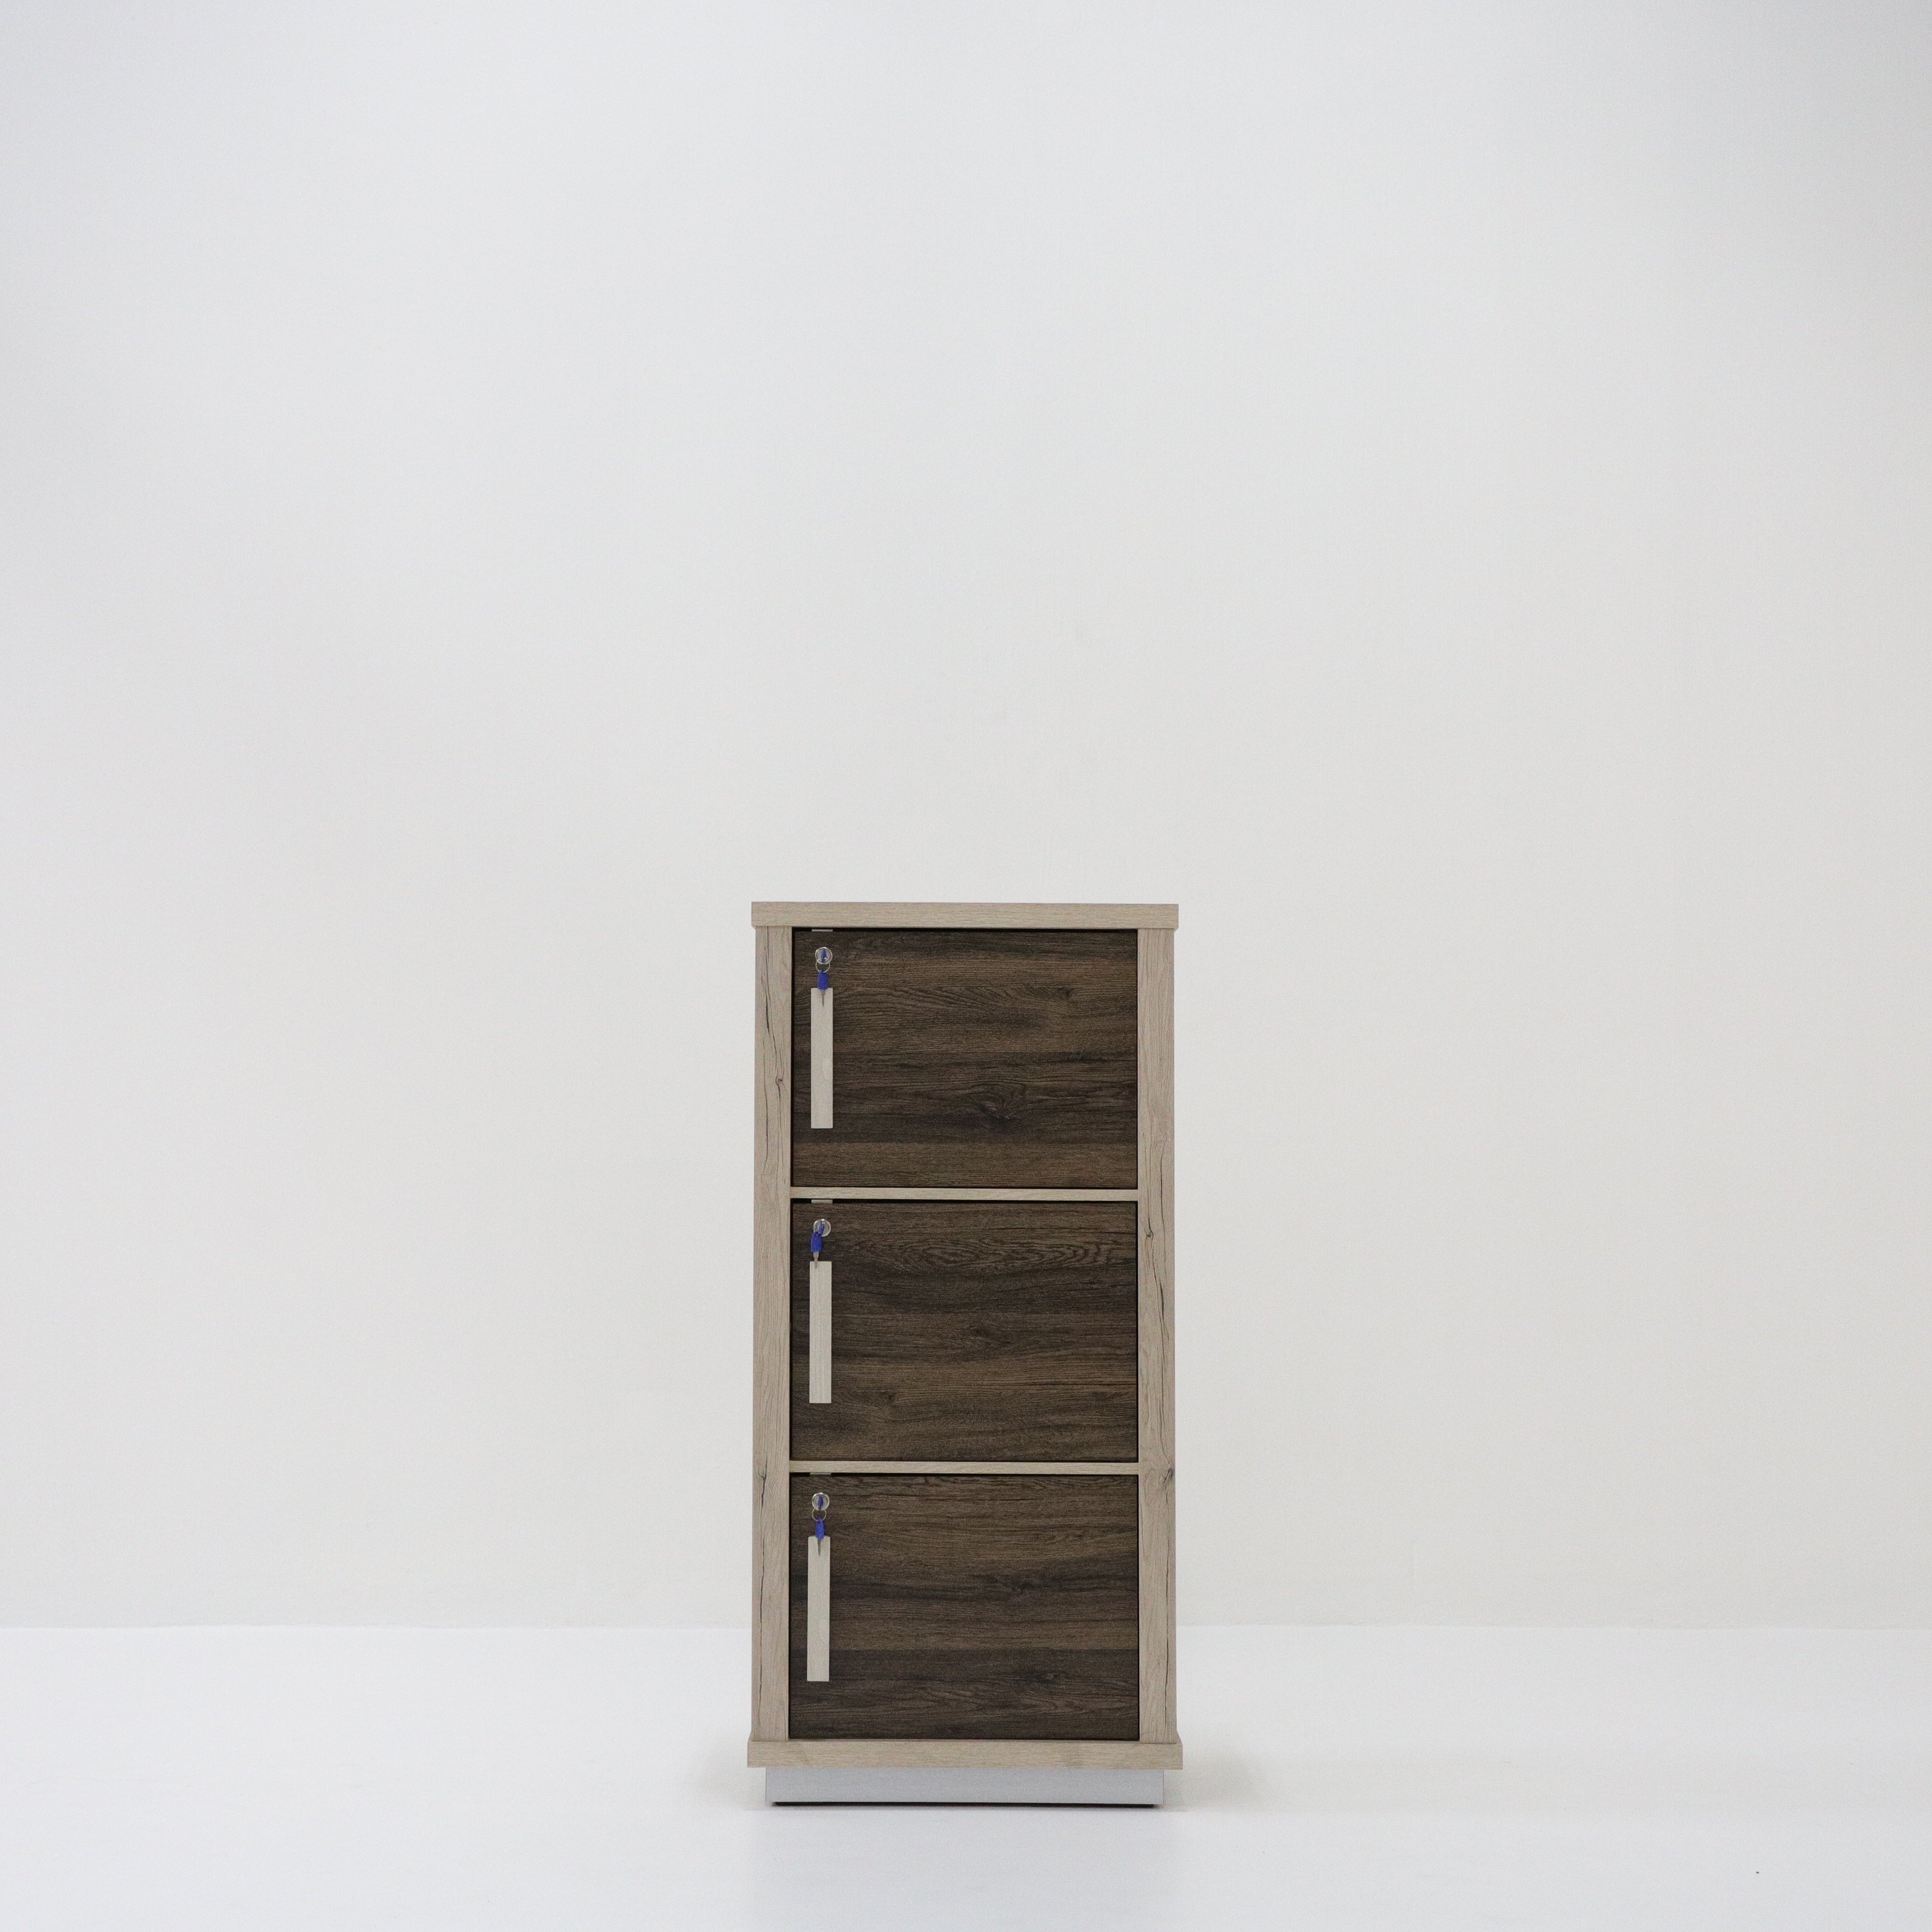 <b>Tonicha 3 Door Storage Shelf Cabinet with Locks</b><br>W600 X D400 X H1245MM